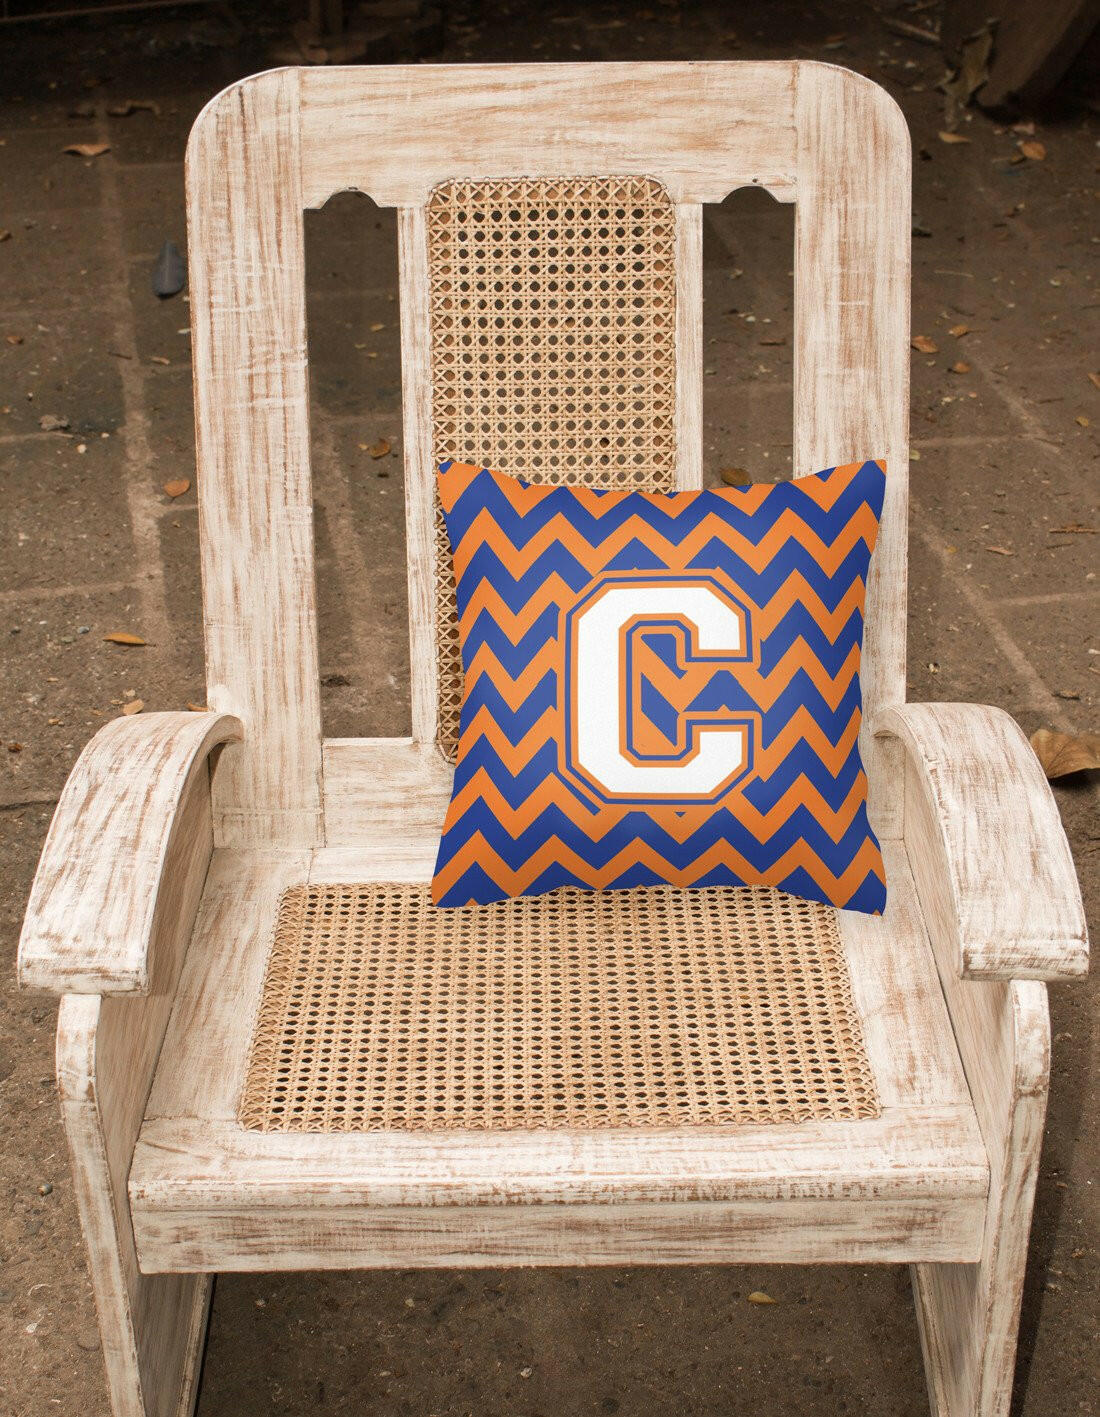 Letter C Chevron Blue and Orange #3 Fabric Decorative Pillow CJ1060-CPW1414 by Caroline's Treasures